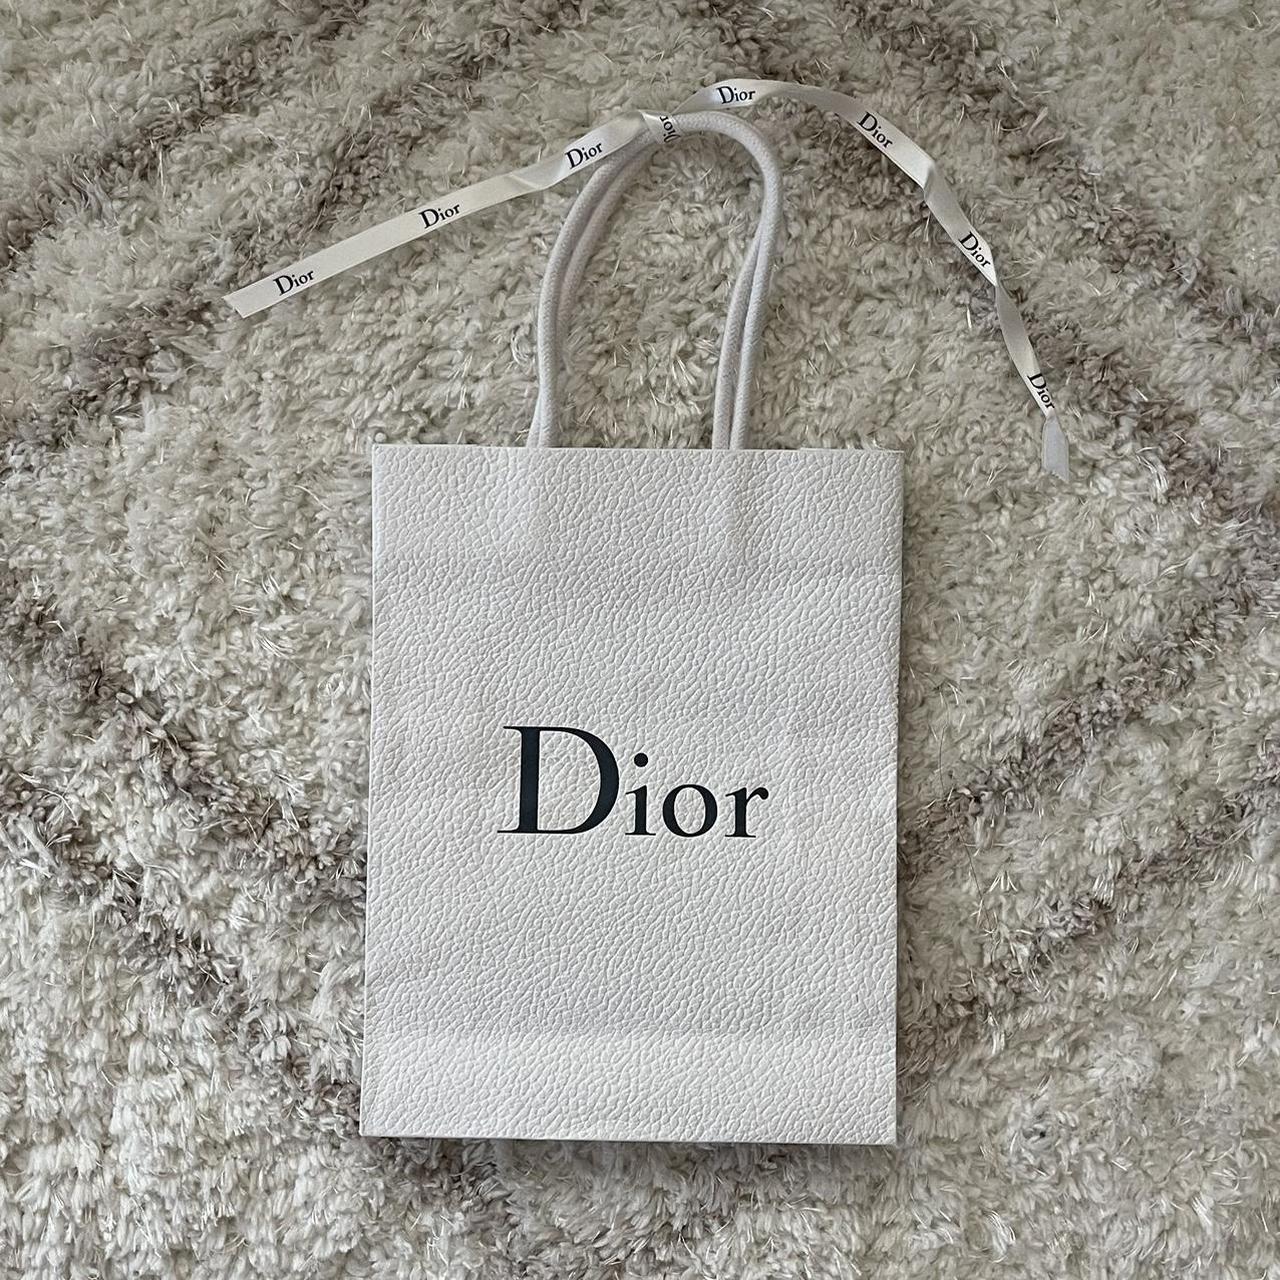 Dior Gift Bag Xmas Black with Silver Logo 35x25x12cm Authentic Brand NEW   eBay